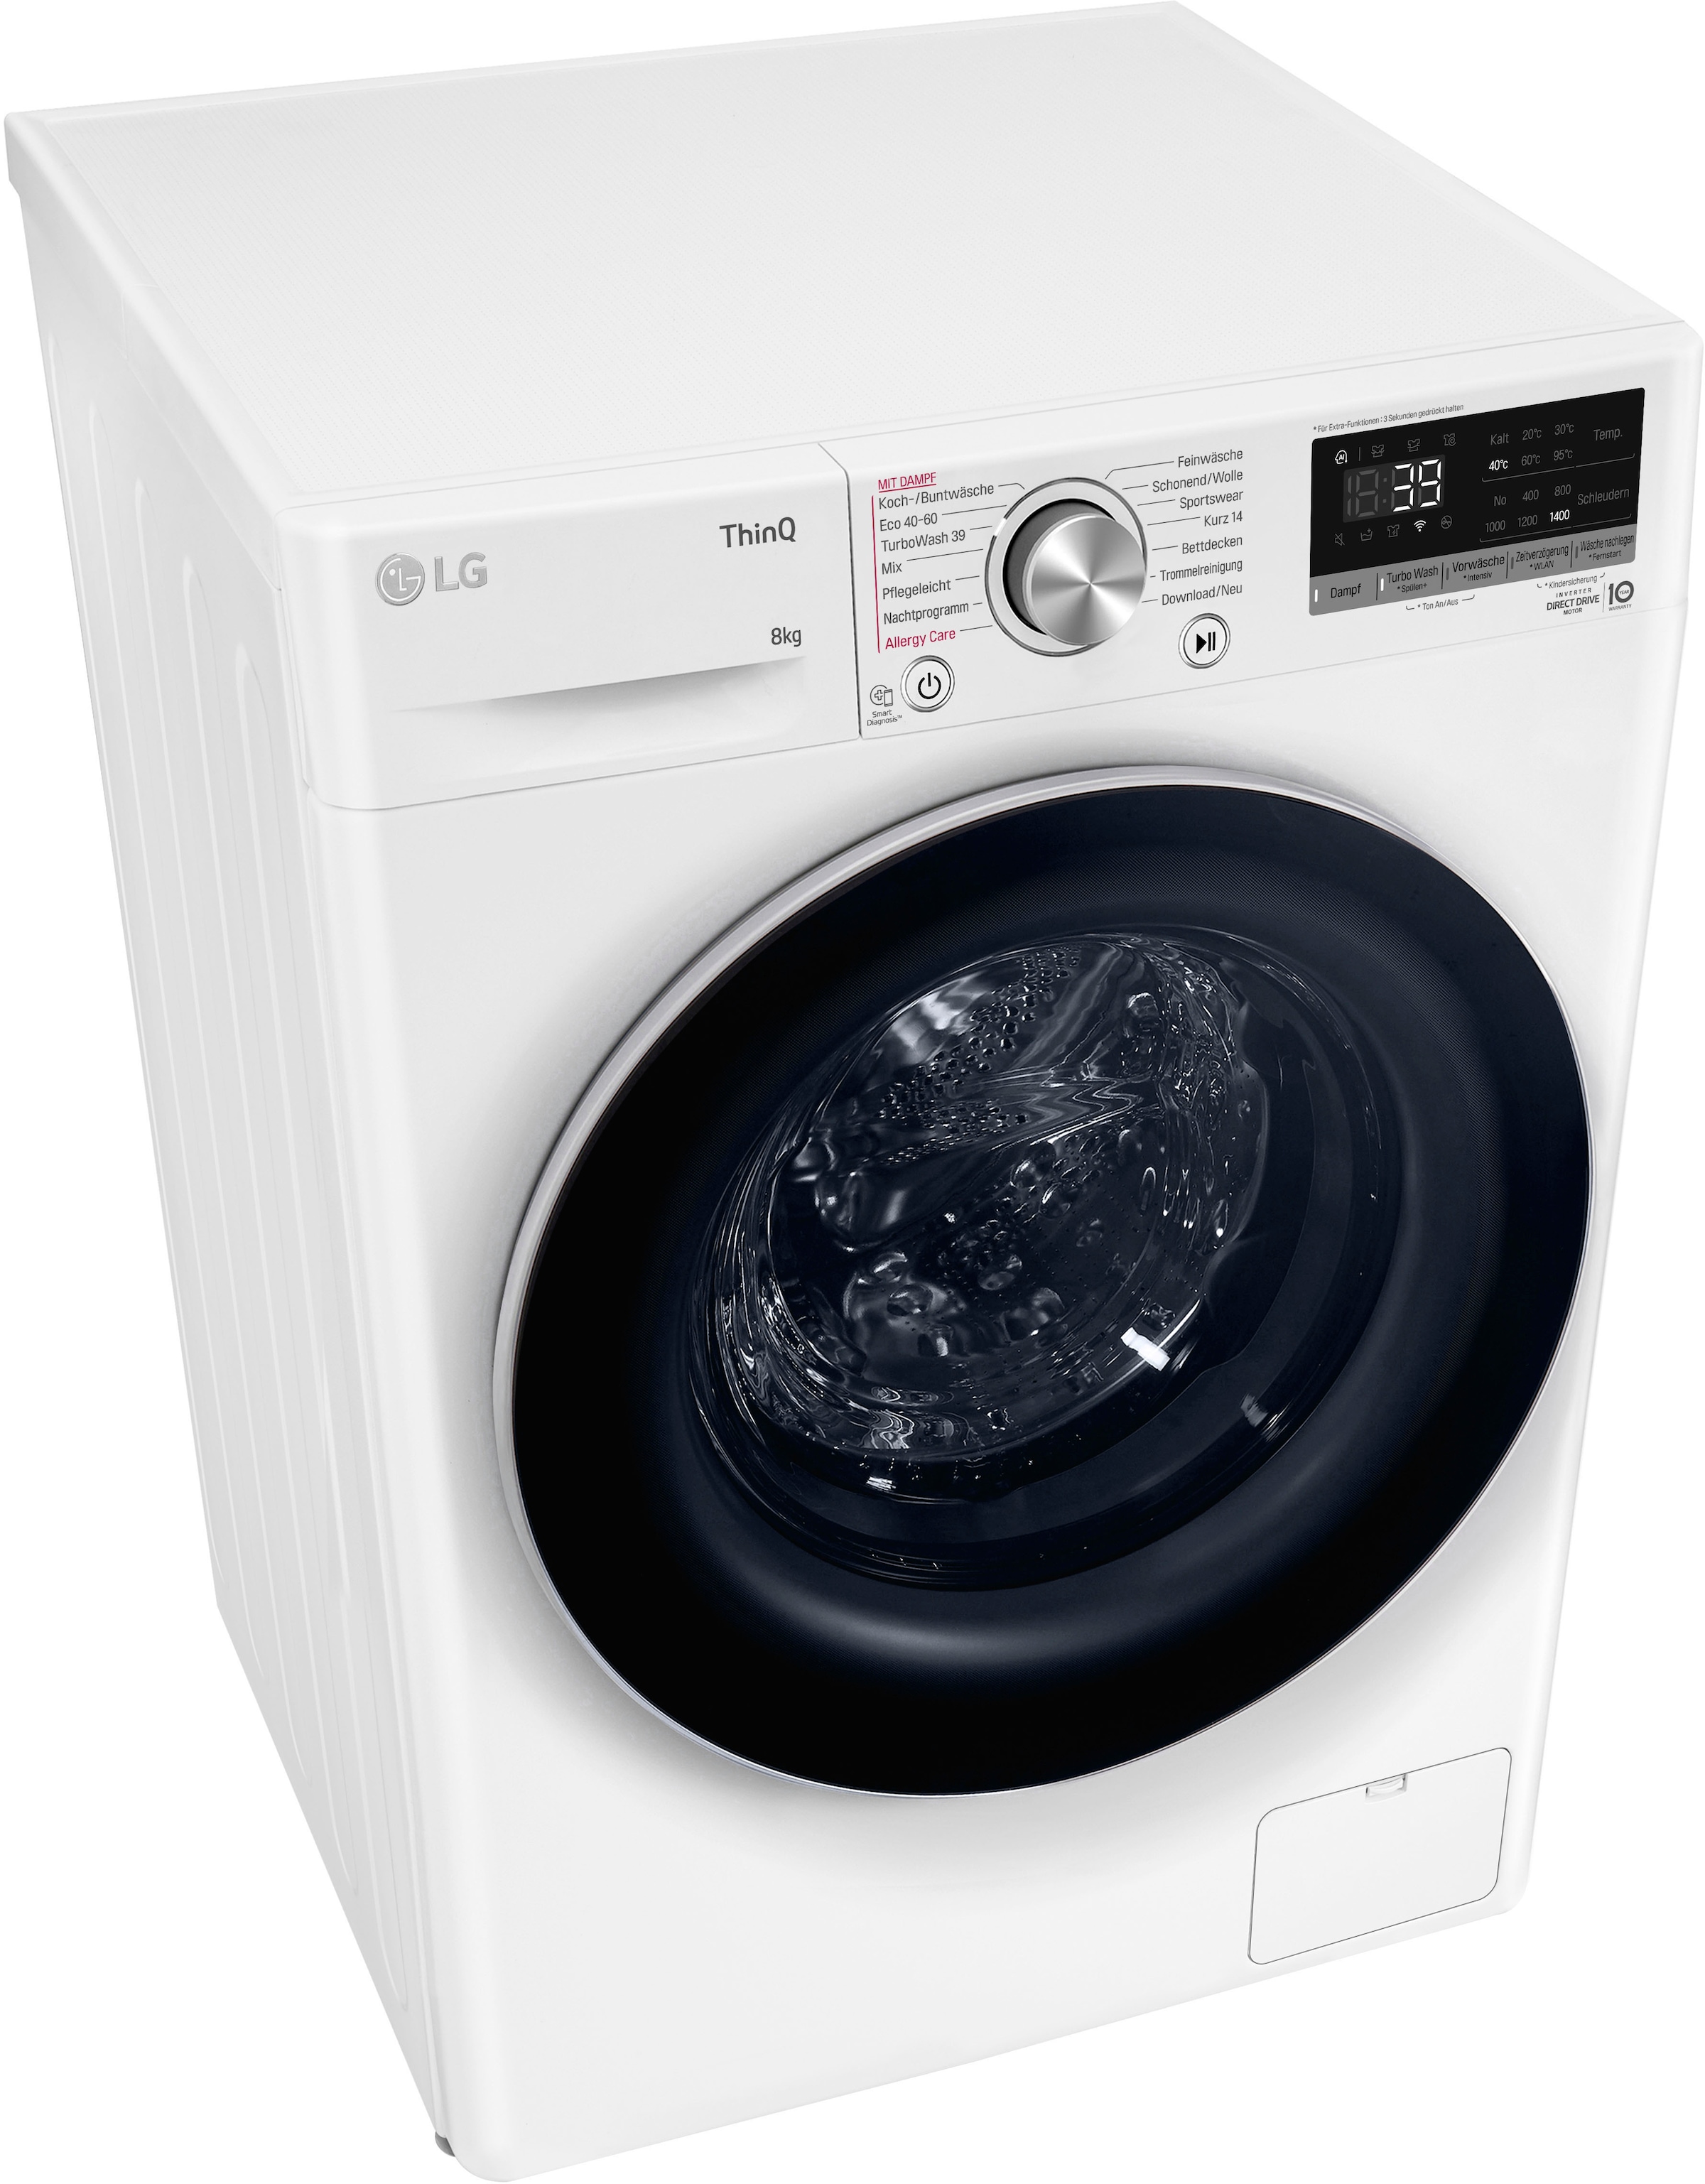 8 7, bestellen Waschmaschine online »F4WV708P1E«, Serie F4WV708P1E, U/min 1400 LG kg,